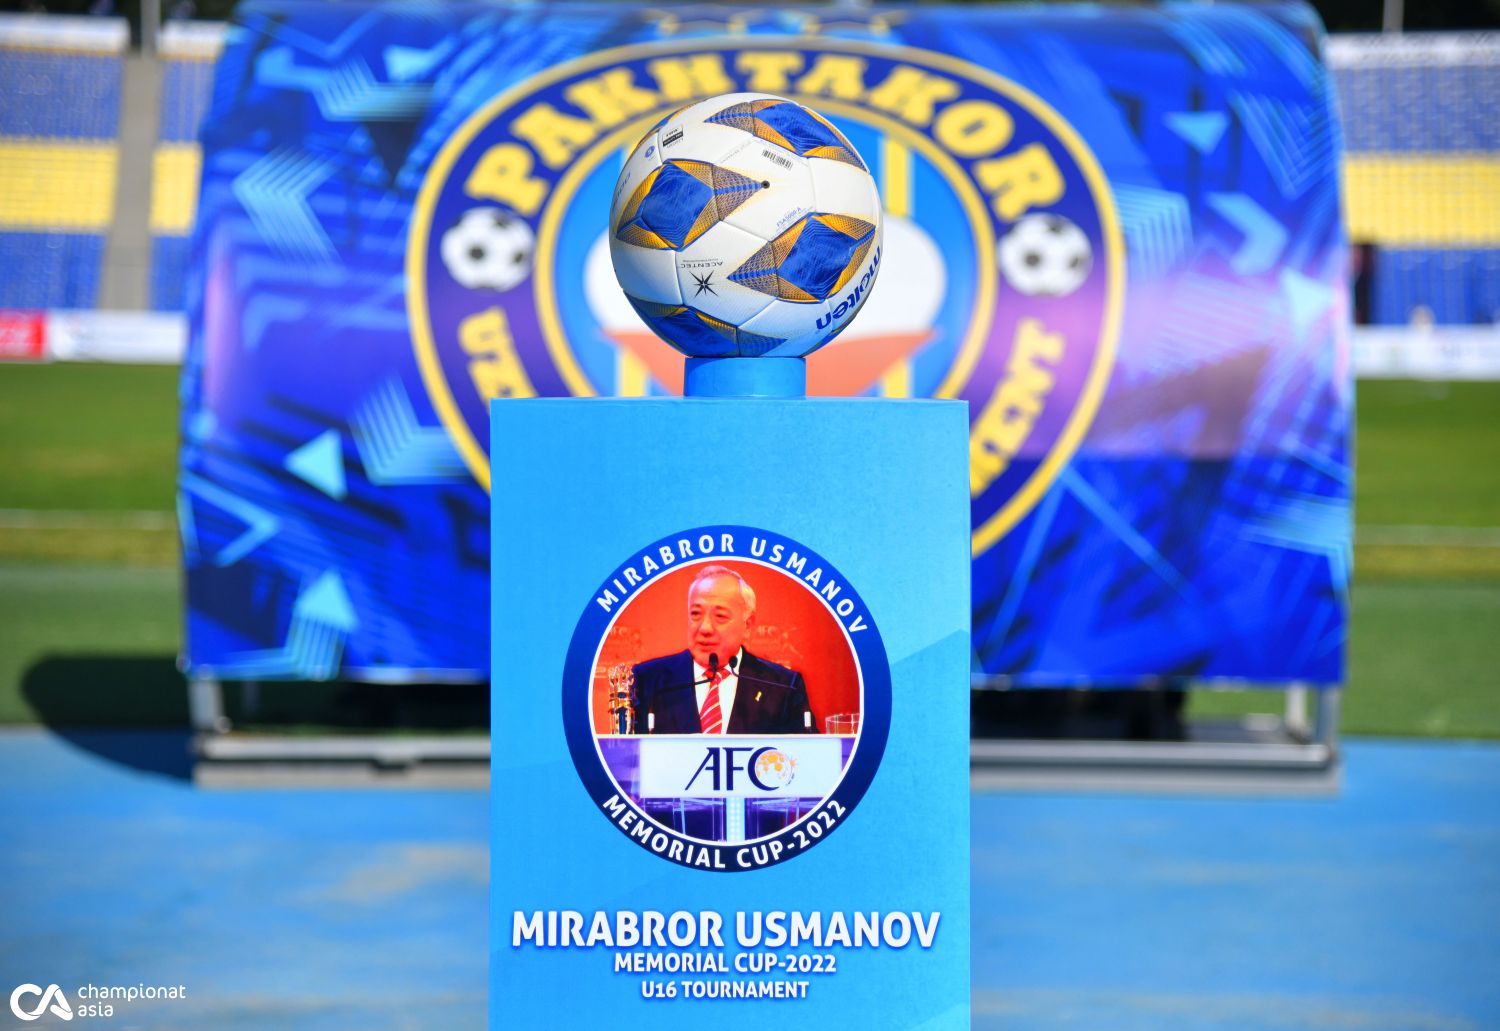 ФОТОГАЛЕРЕЯ. “Mirabror Usmanov Memorial Cup-2022”. Узбекистан - Таджикистан 5:0